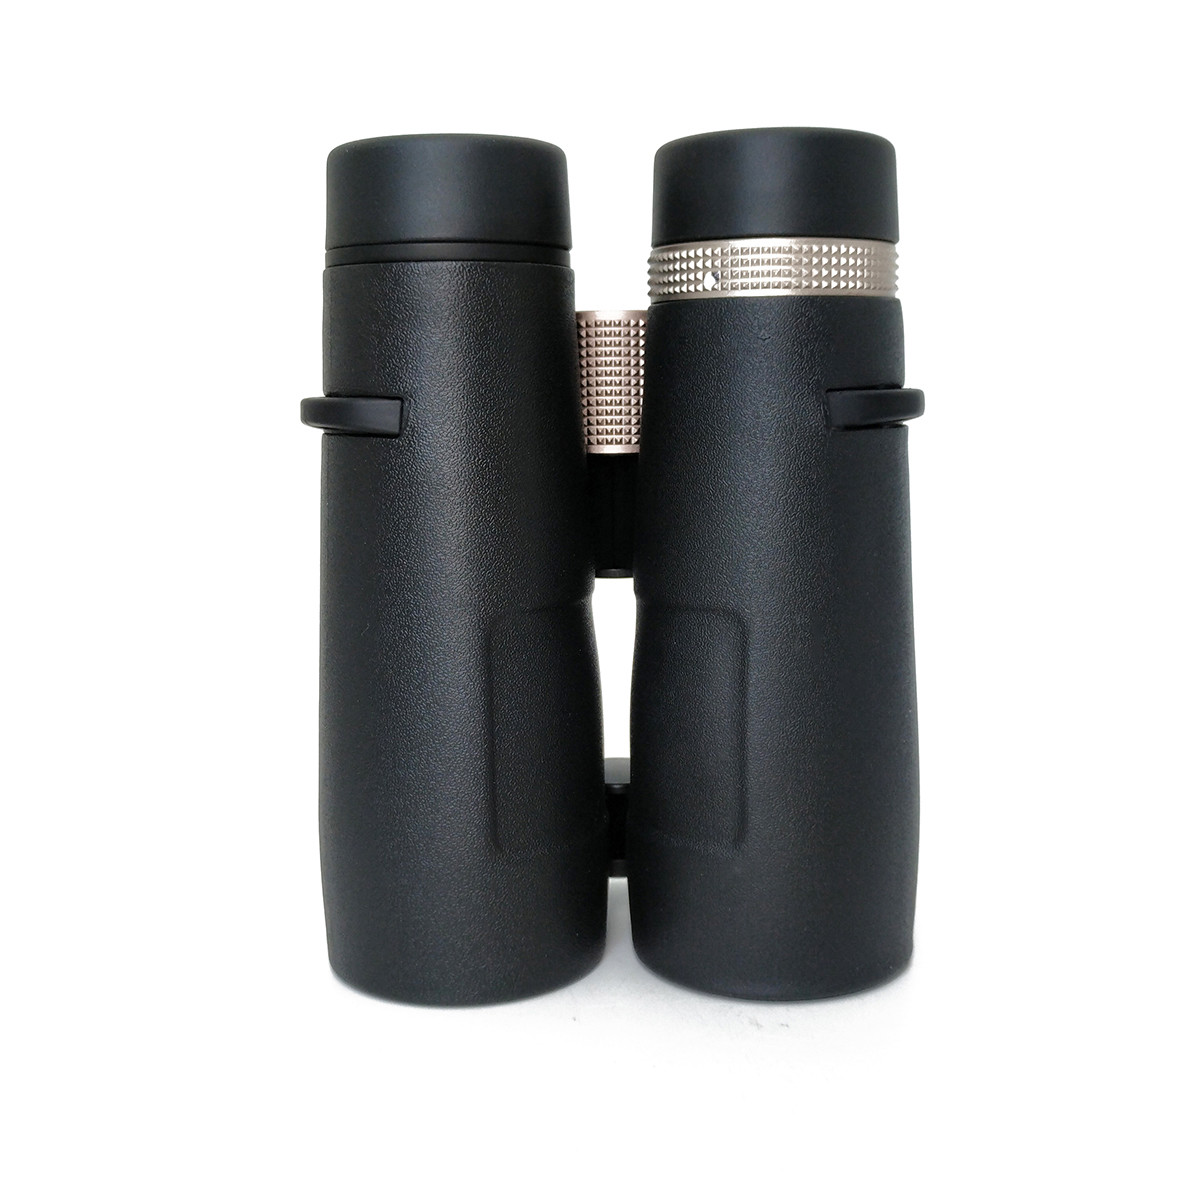 Portable 8X42 ED Lens Roof Binoculars Telescope For Hunting Bird Watching